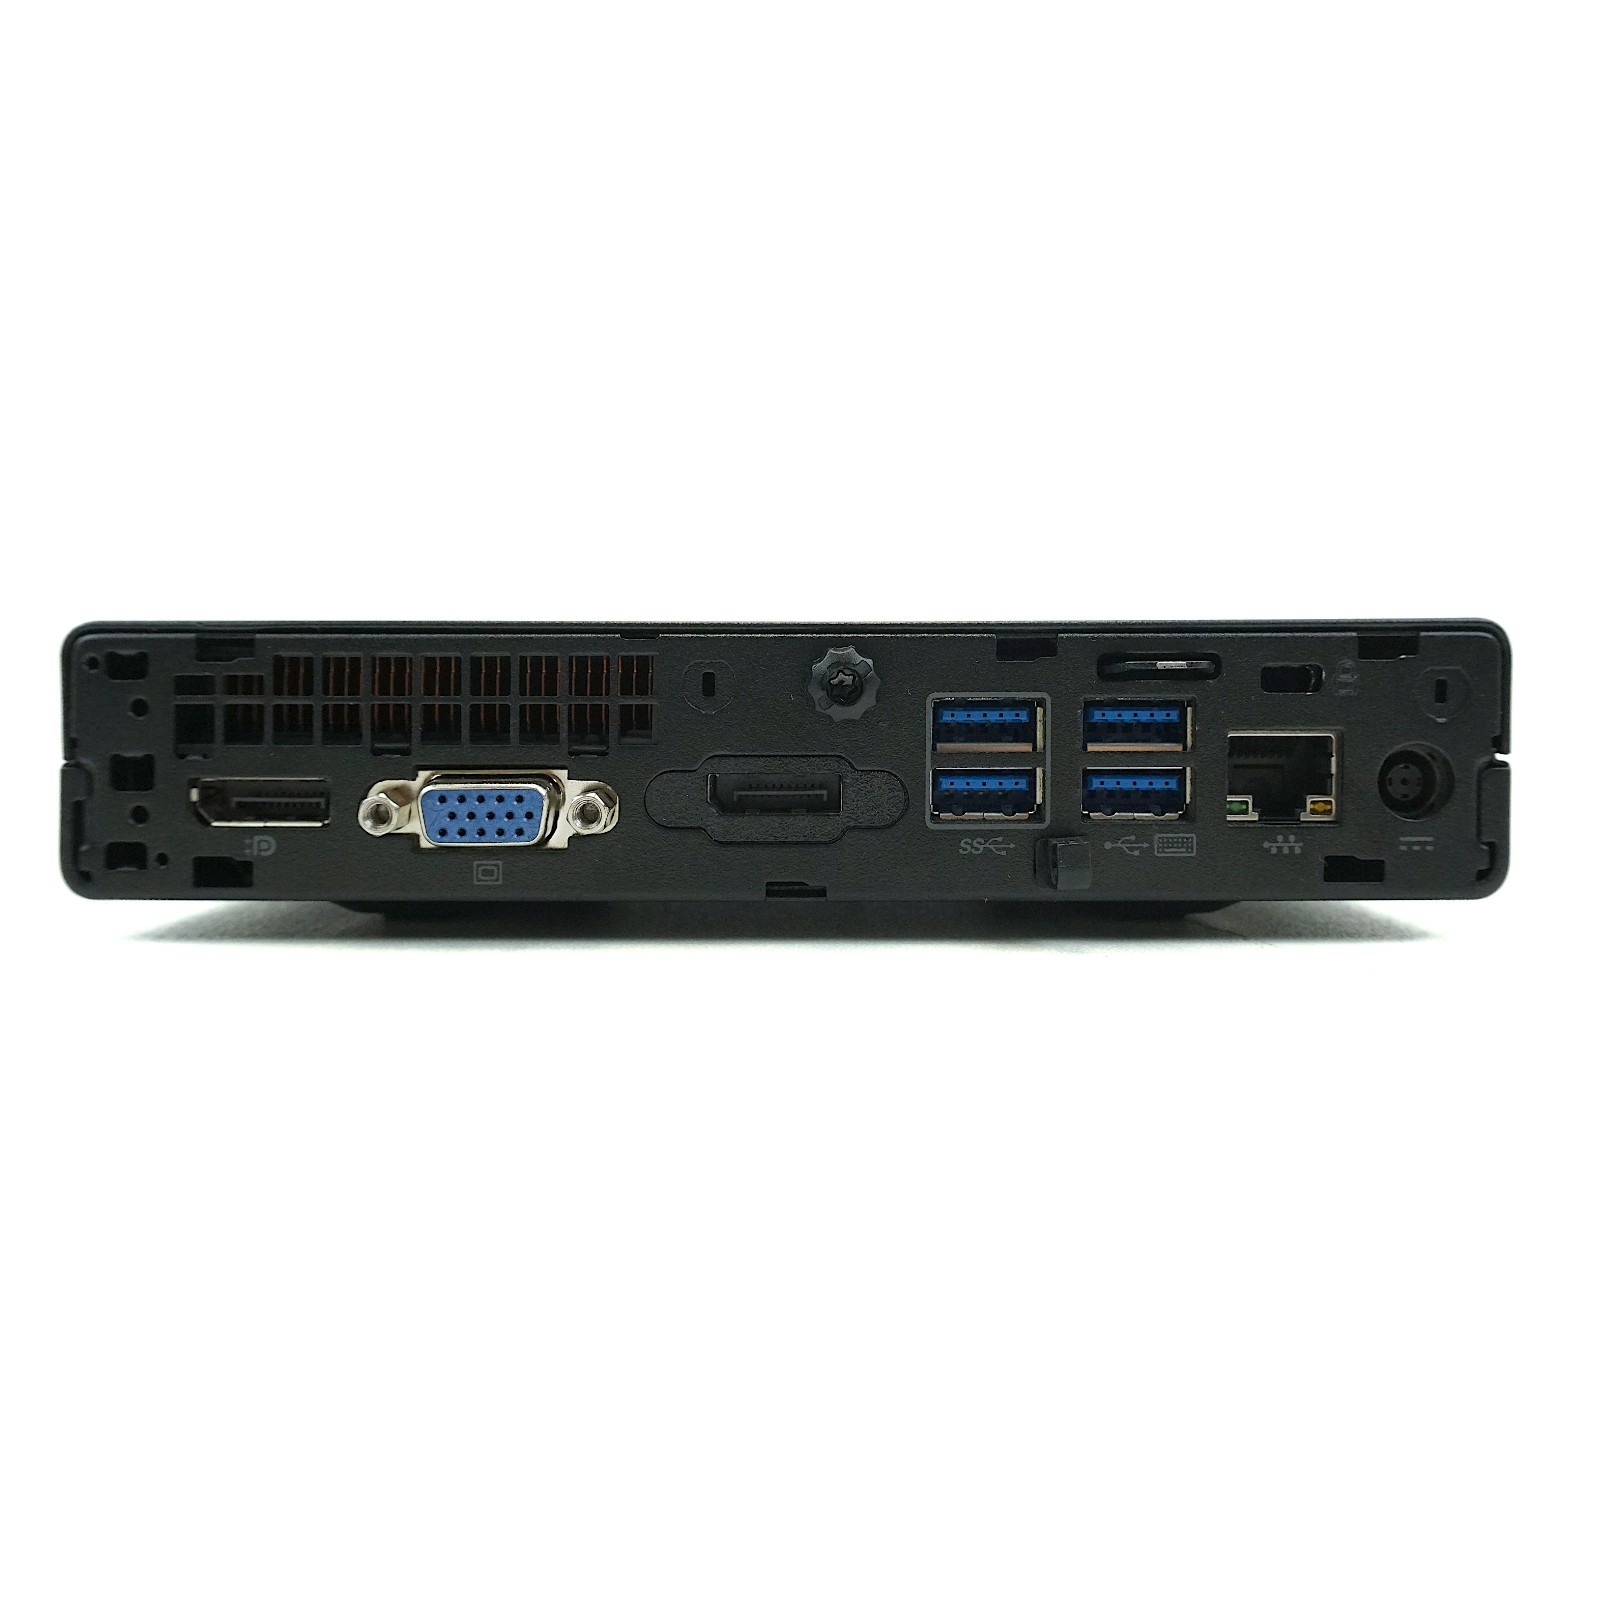 HP EliteDesk 800 G2 Mini Desktop PC | Configure To Order